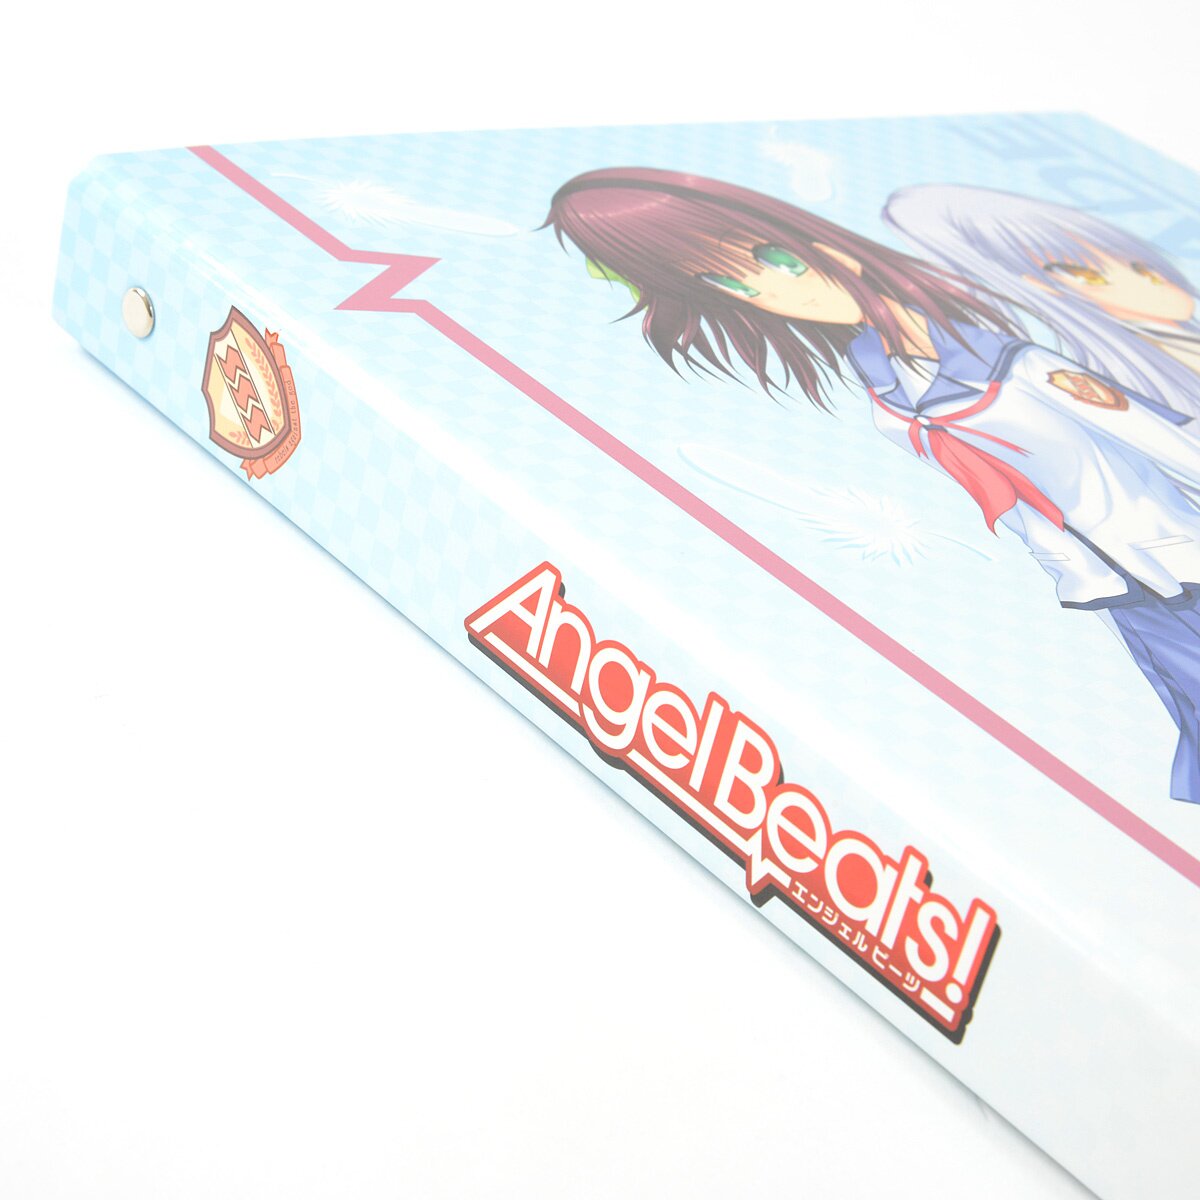 Angel Beats! Kondeka! Poster Binder - Tokyo Otaku Mode (TOM)